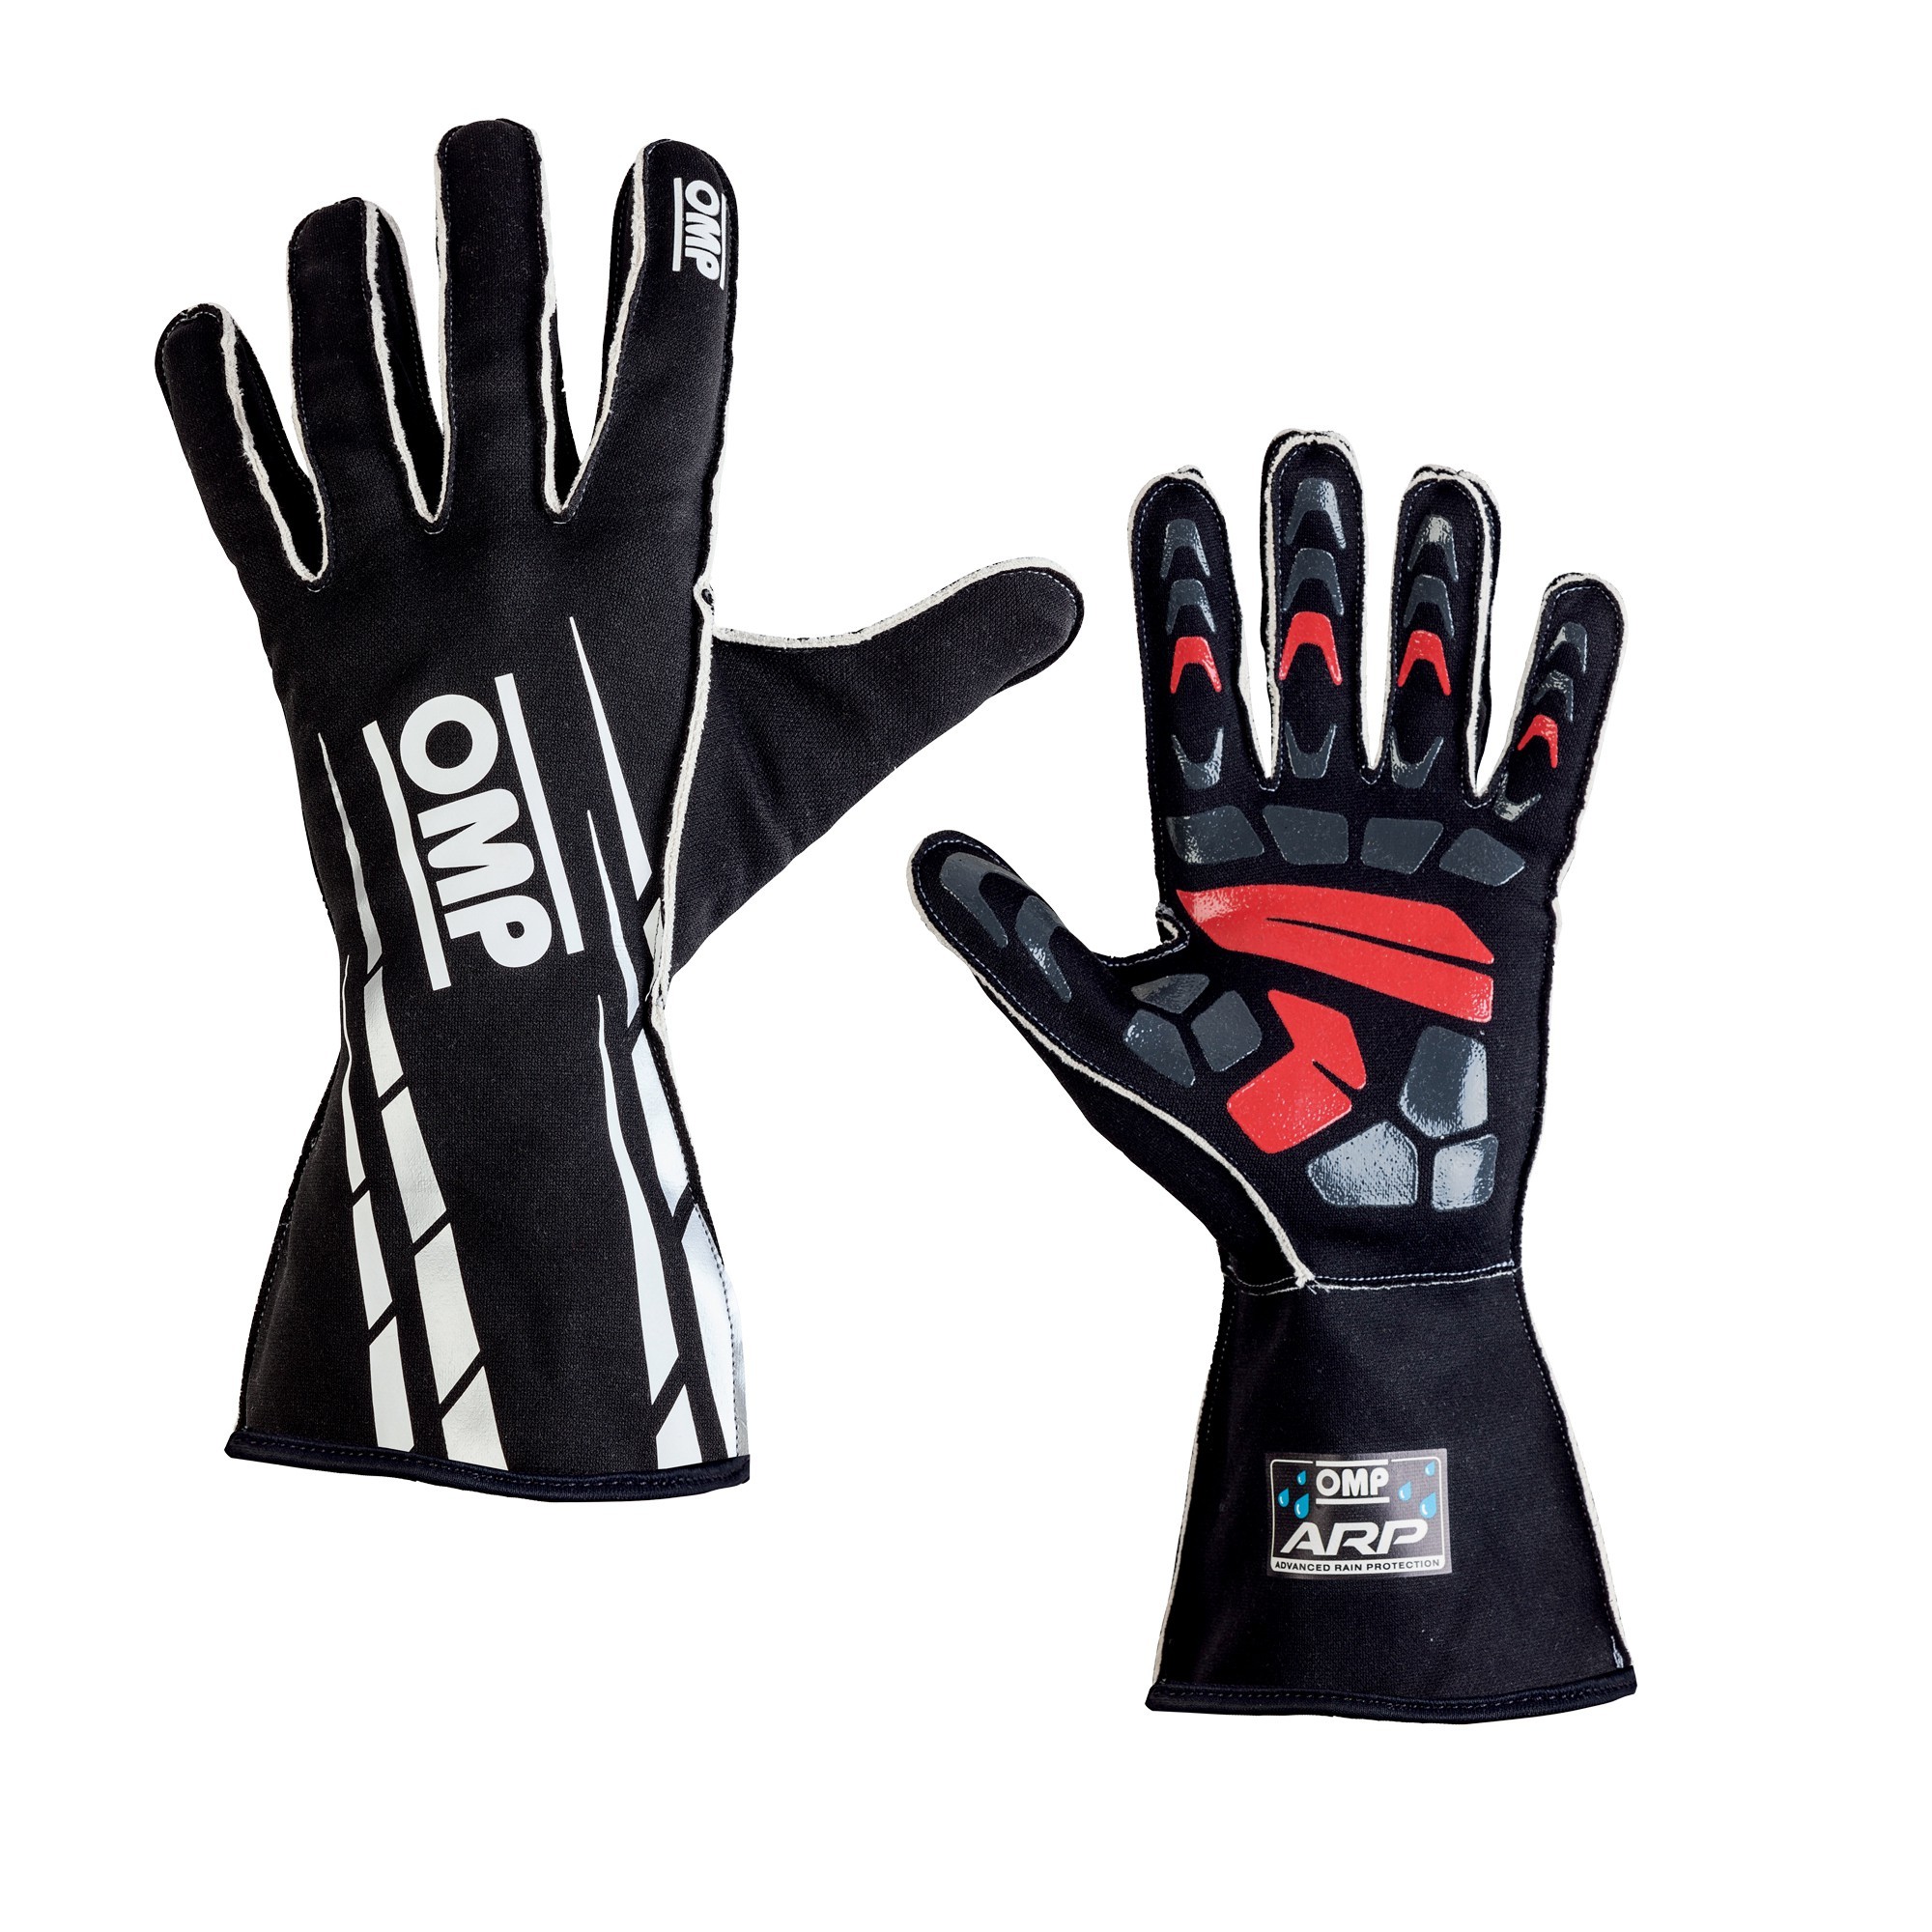 Advanced RainProof (ARP) Gloves